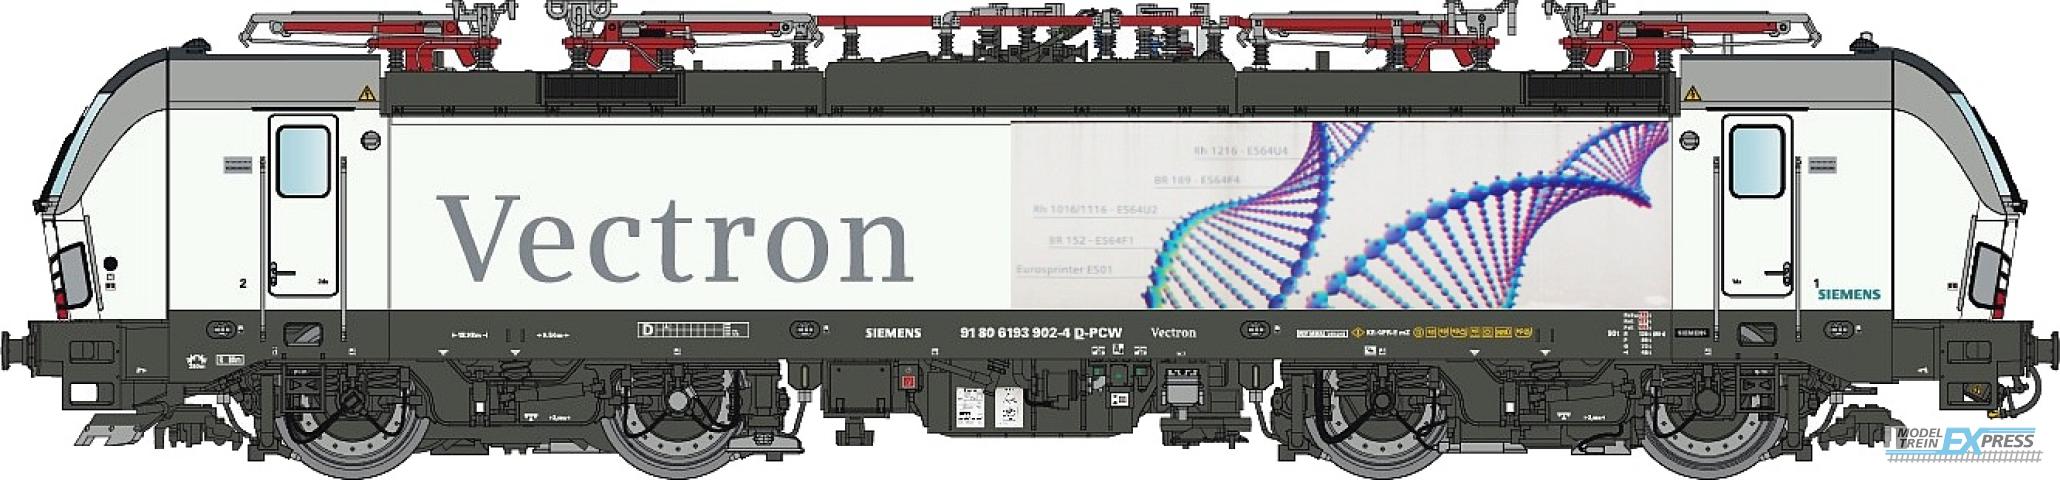 LS Models 16561 LOCON/EP Cargo Smartron, 91 80 6192 060-2 D-NRAIL (91 80 6192 060-2)  /  Ep. VI  /  DB  /  HO  /  AC  /  1 P.